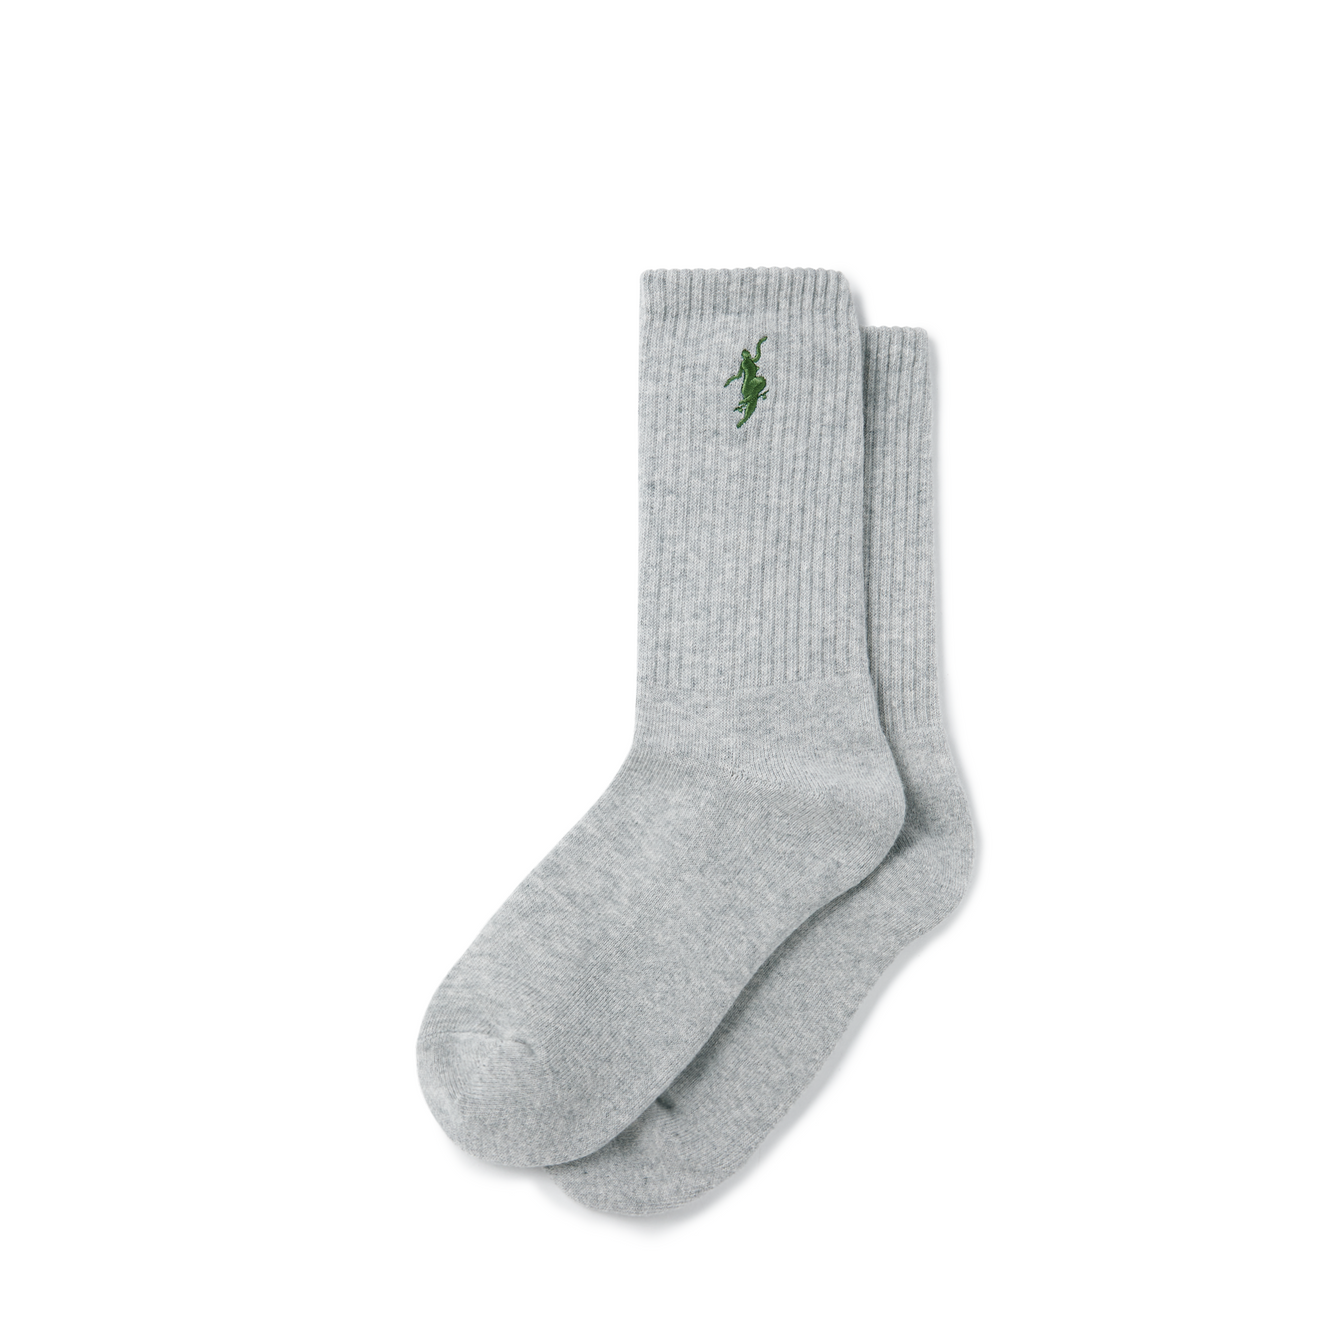 No Comply Rib Socks, Grey / Green